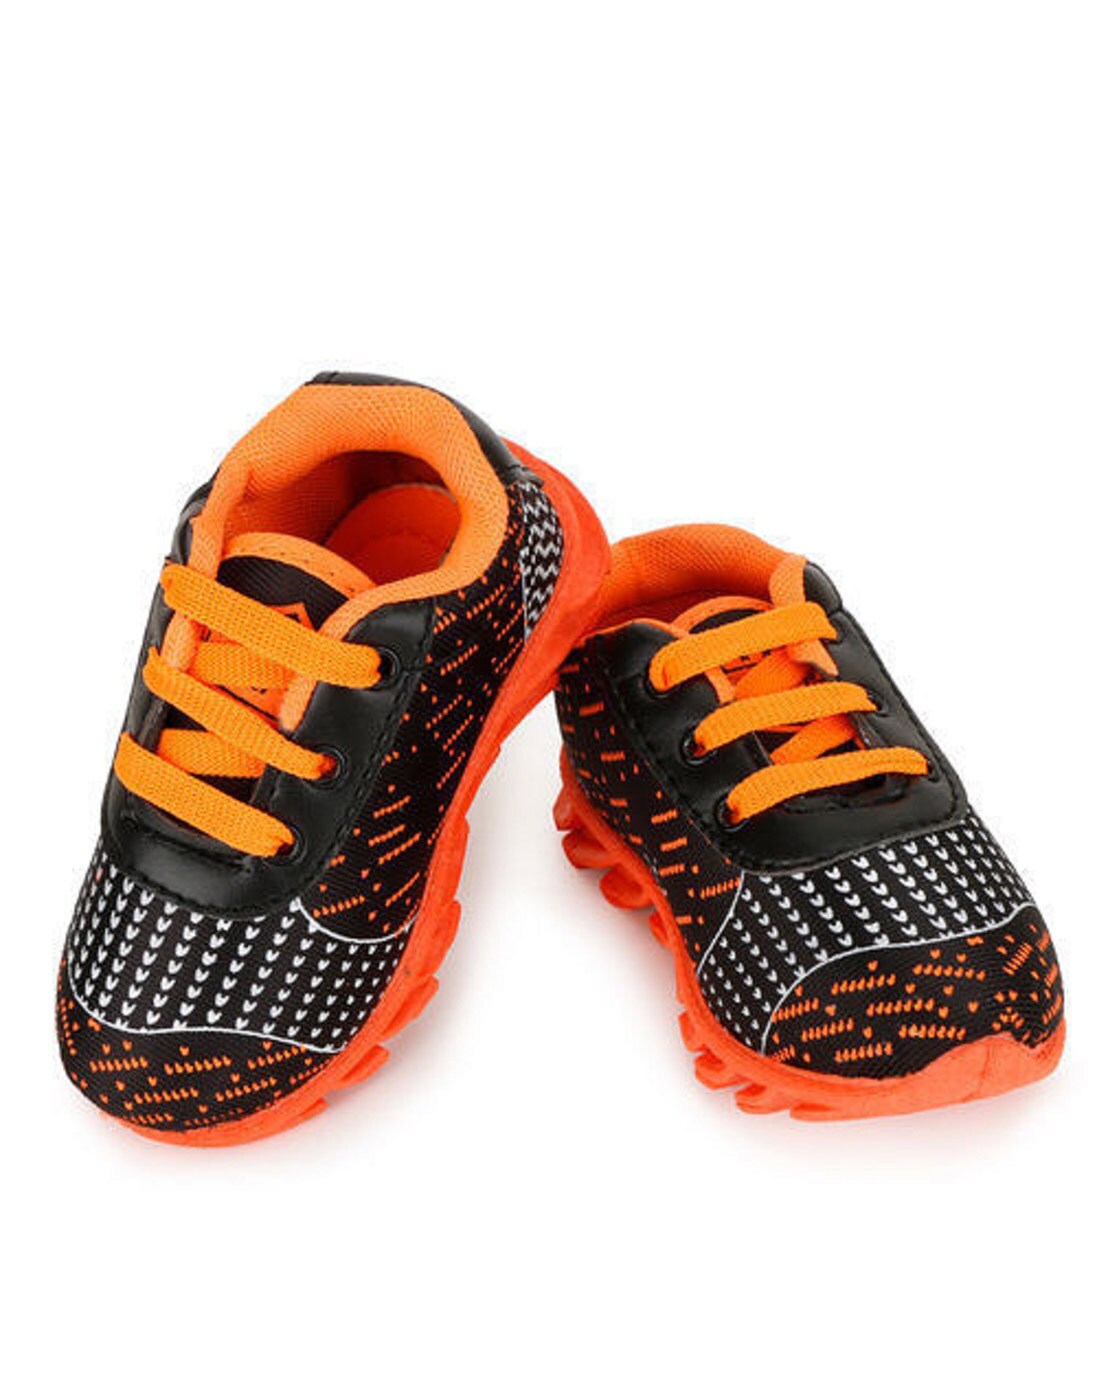 orange boys tennis shoes